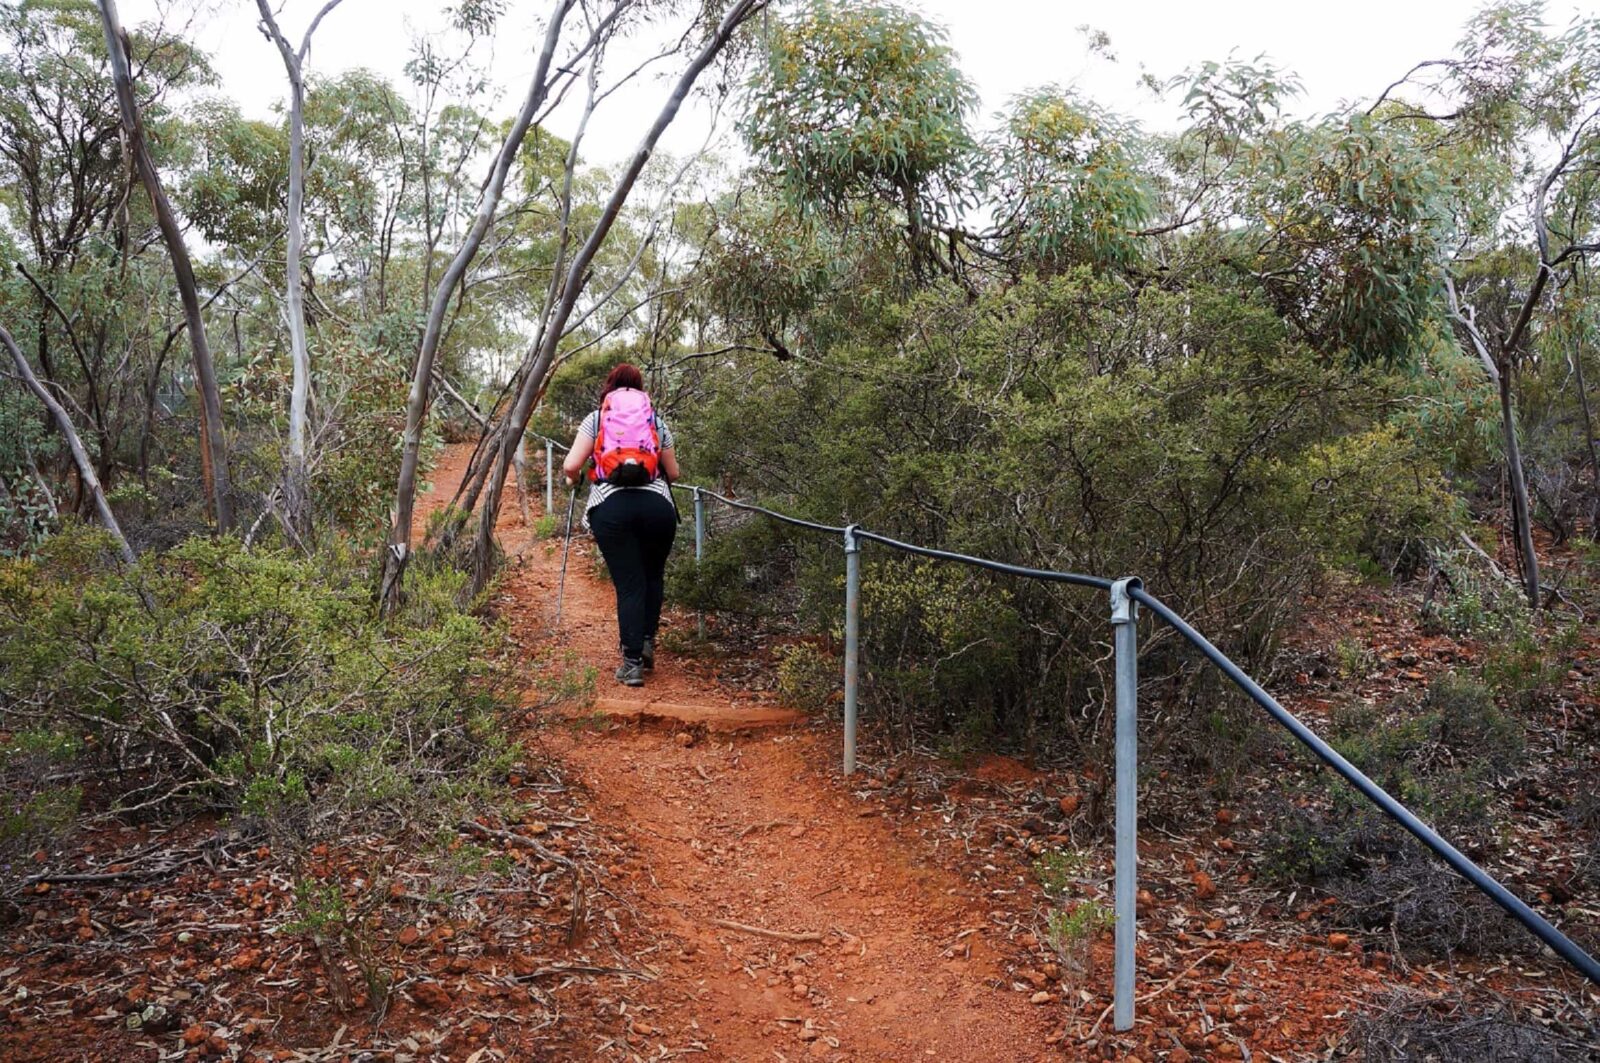 Mount Matilda Walk Trail, Wongan Hills, Western Australia